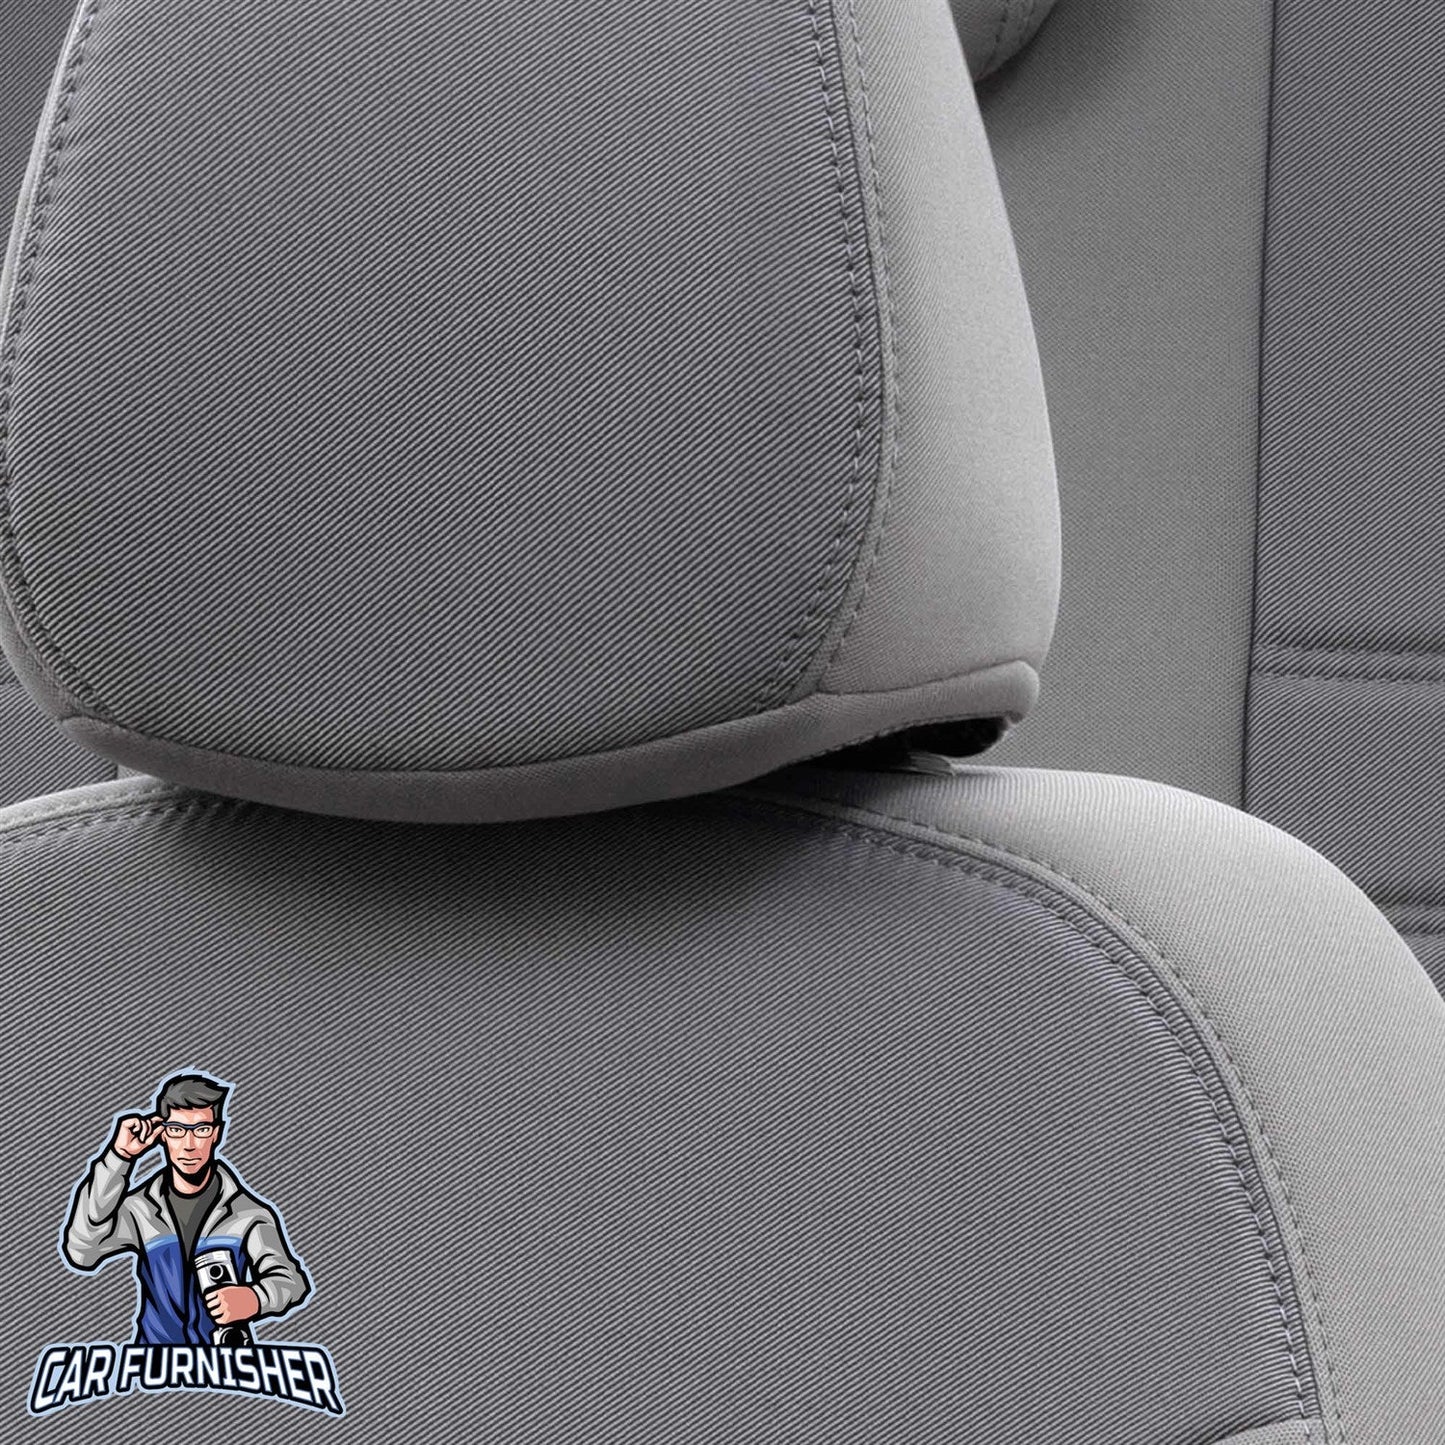 Toyota Yaris Seat Cover Original Jacquard Design Gray Jacquard Fabric